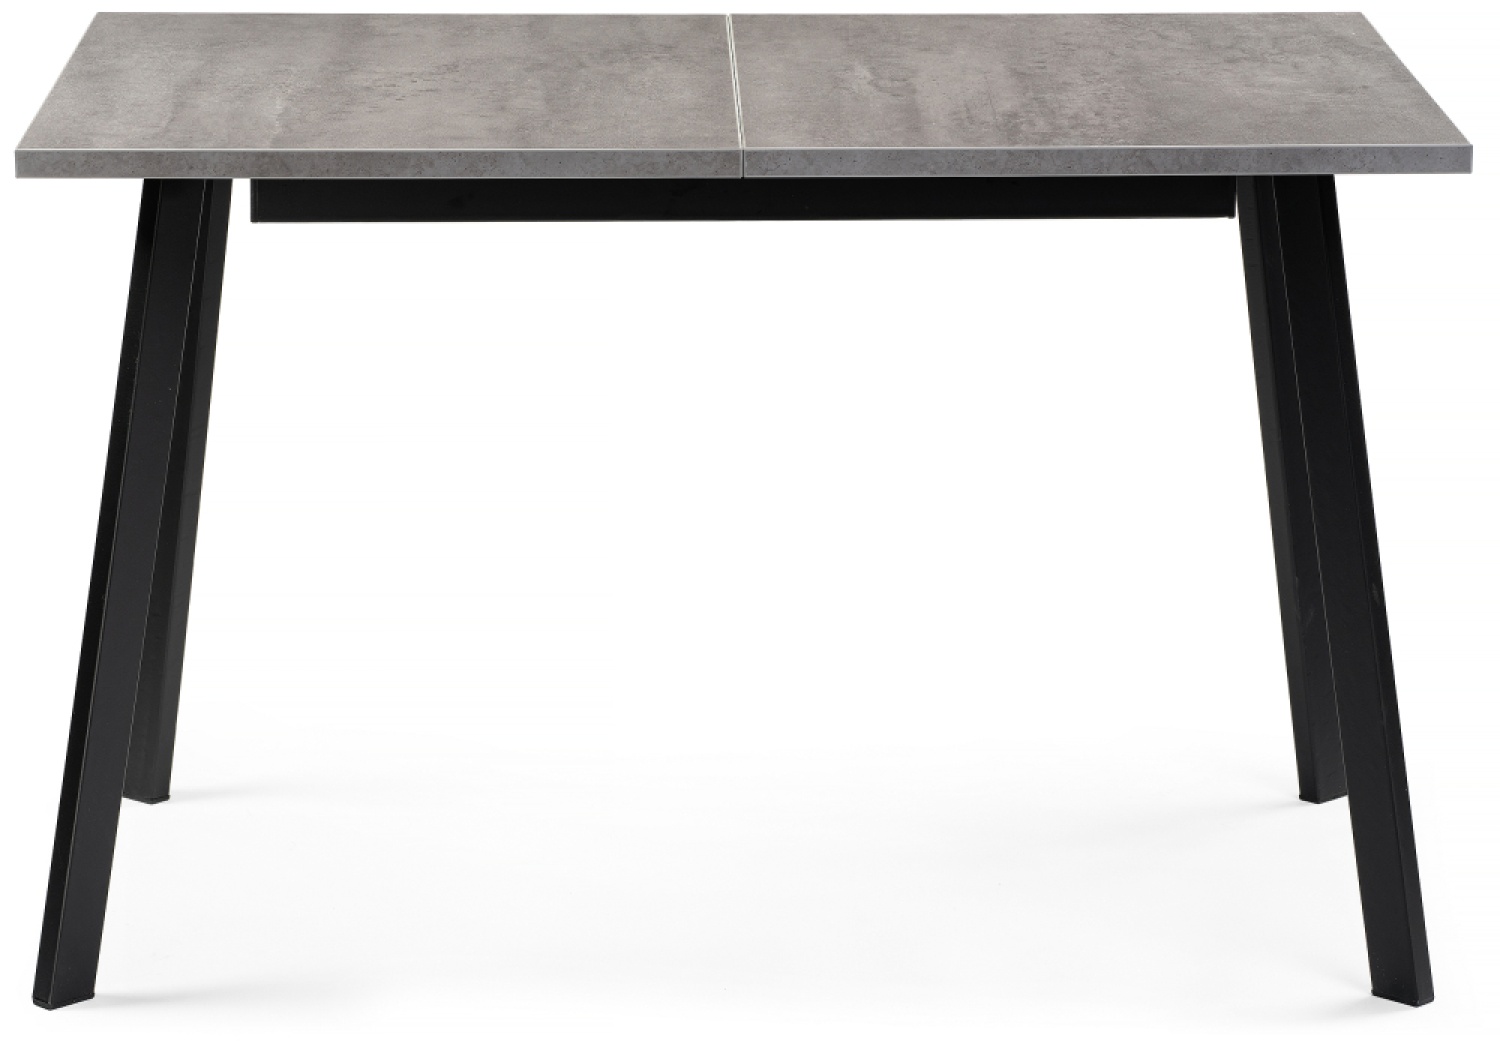 Деревянный стол Колон Лофт 120(160)х75х75 25 мм бетон / черный матовый